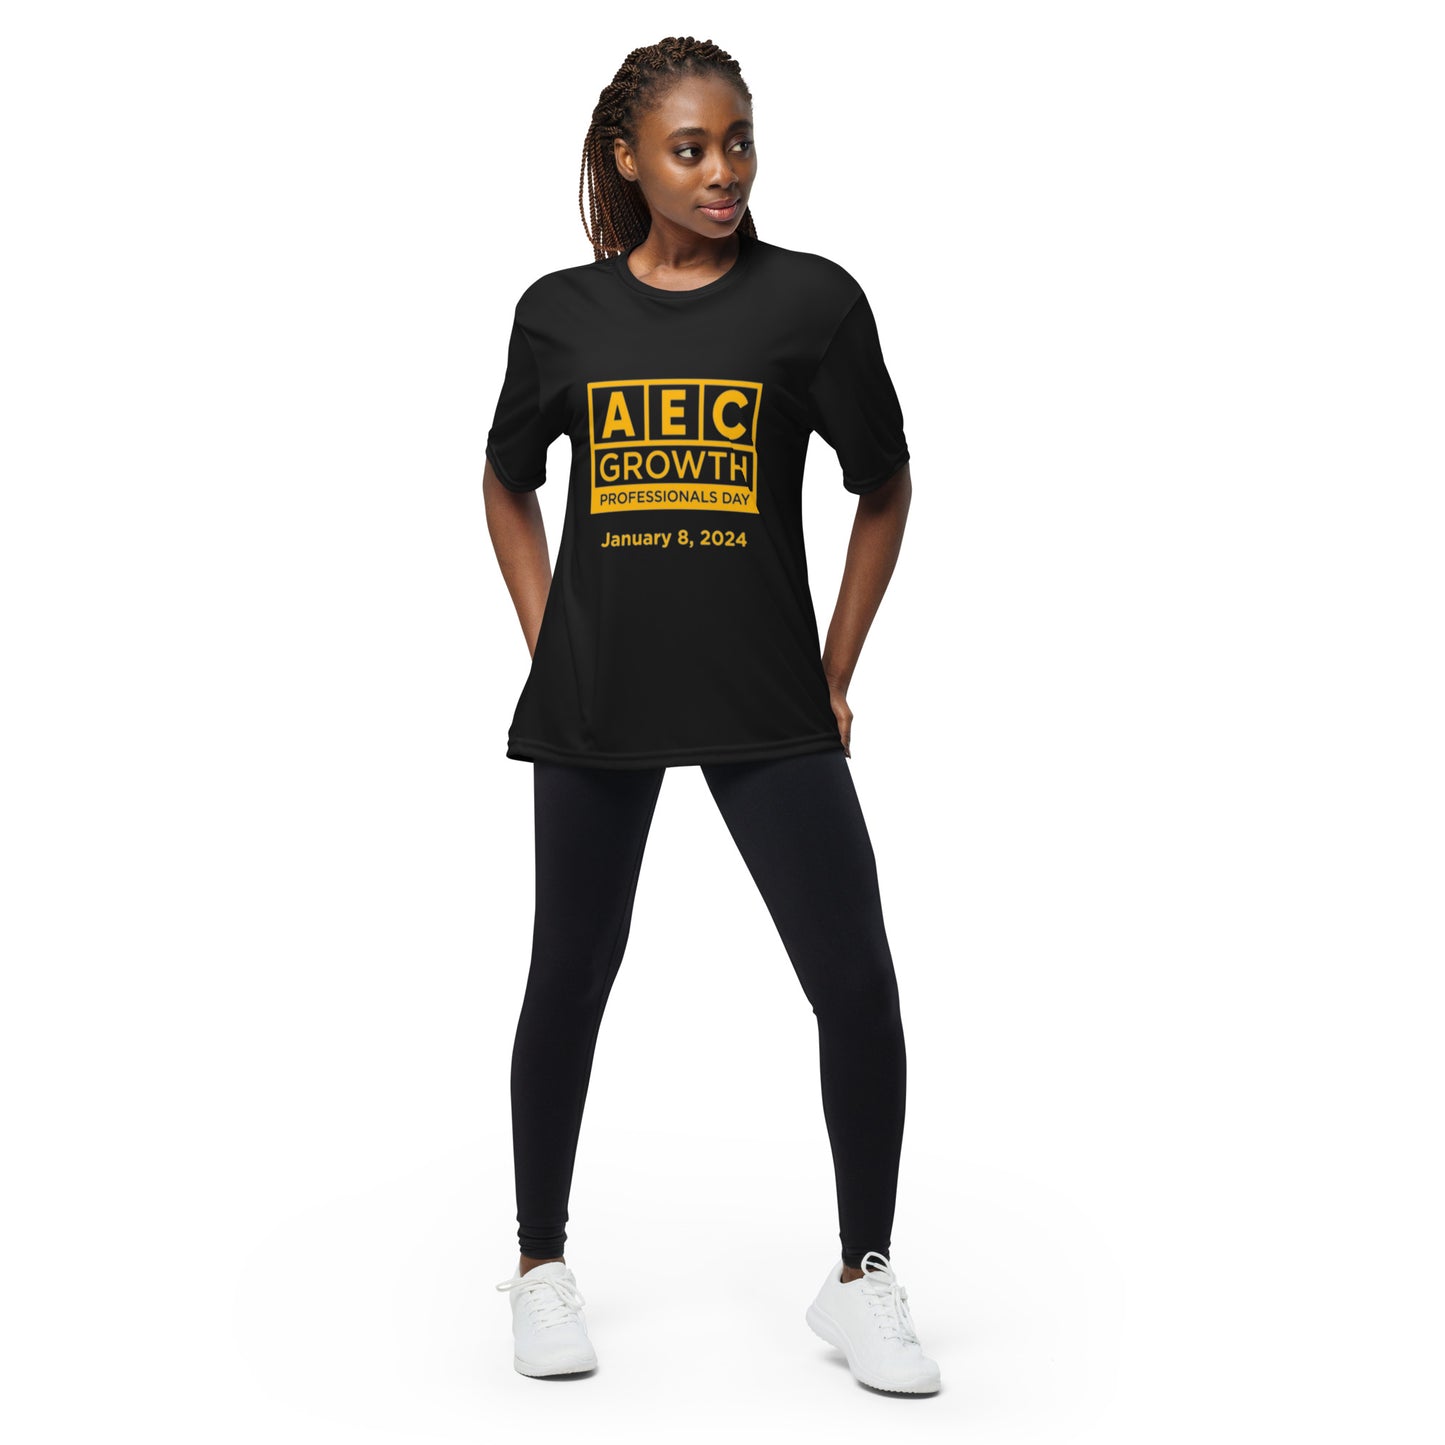 AEC Growth Professionals Day Black unisex t-shirt